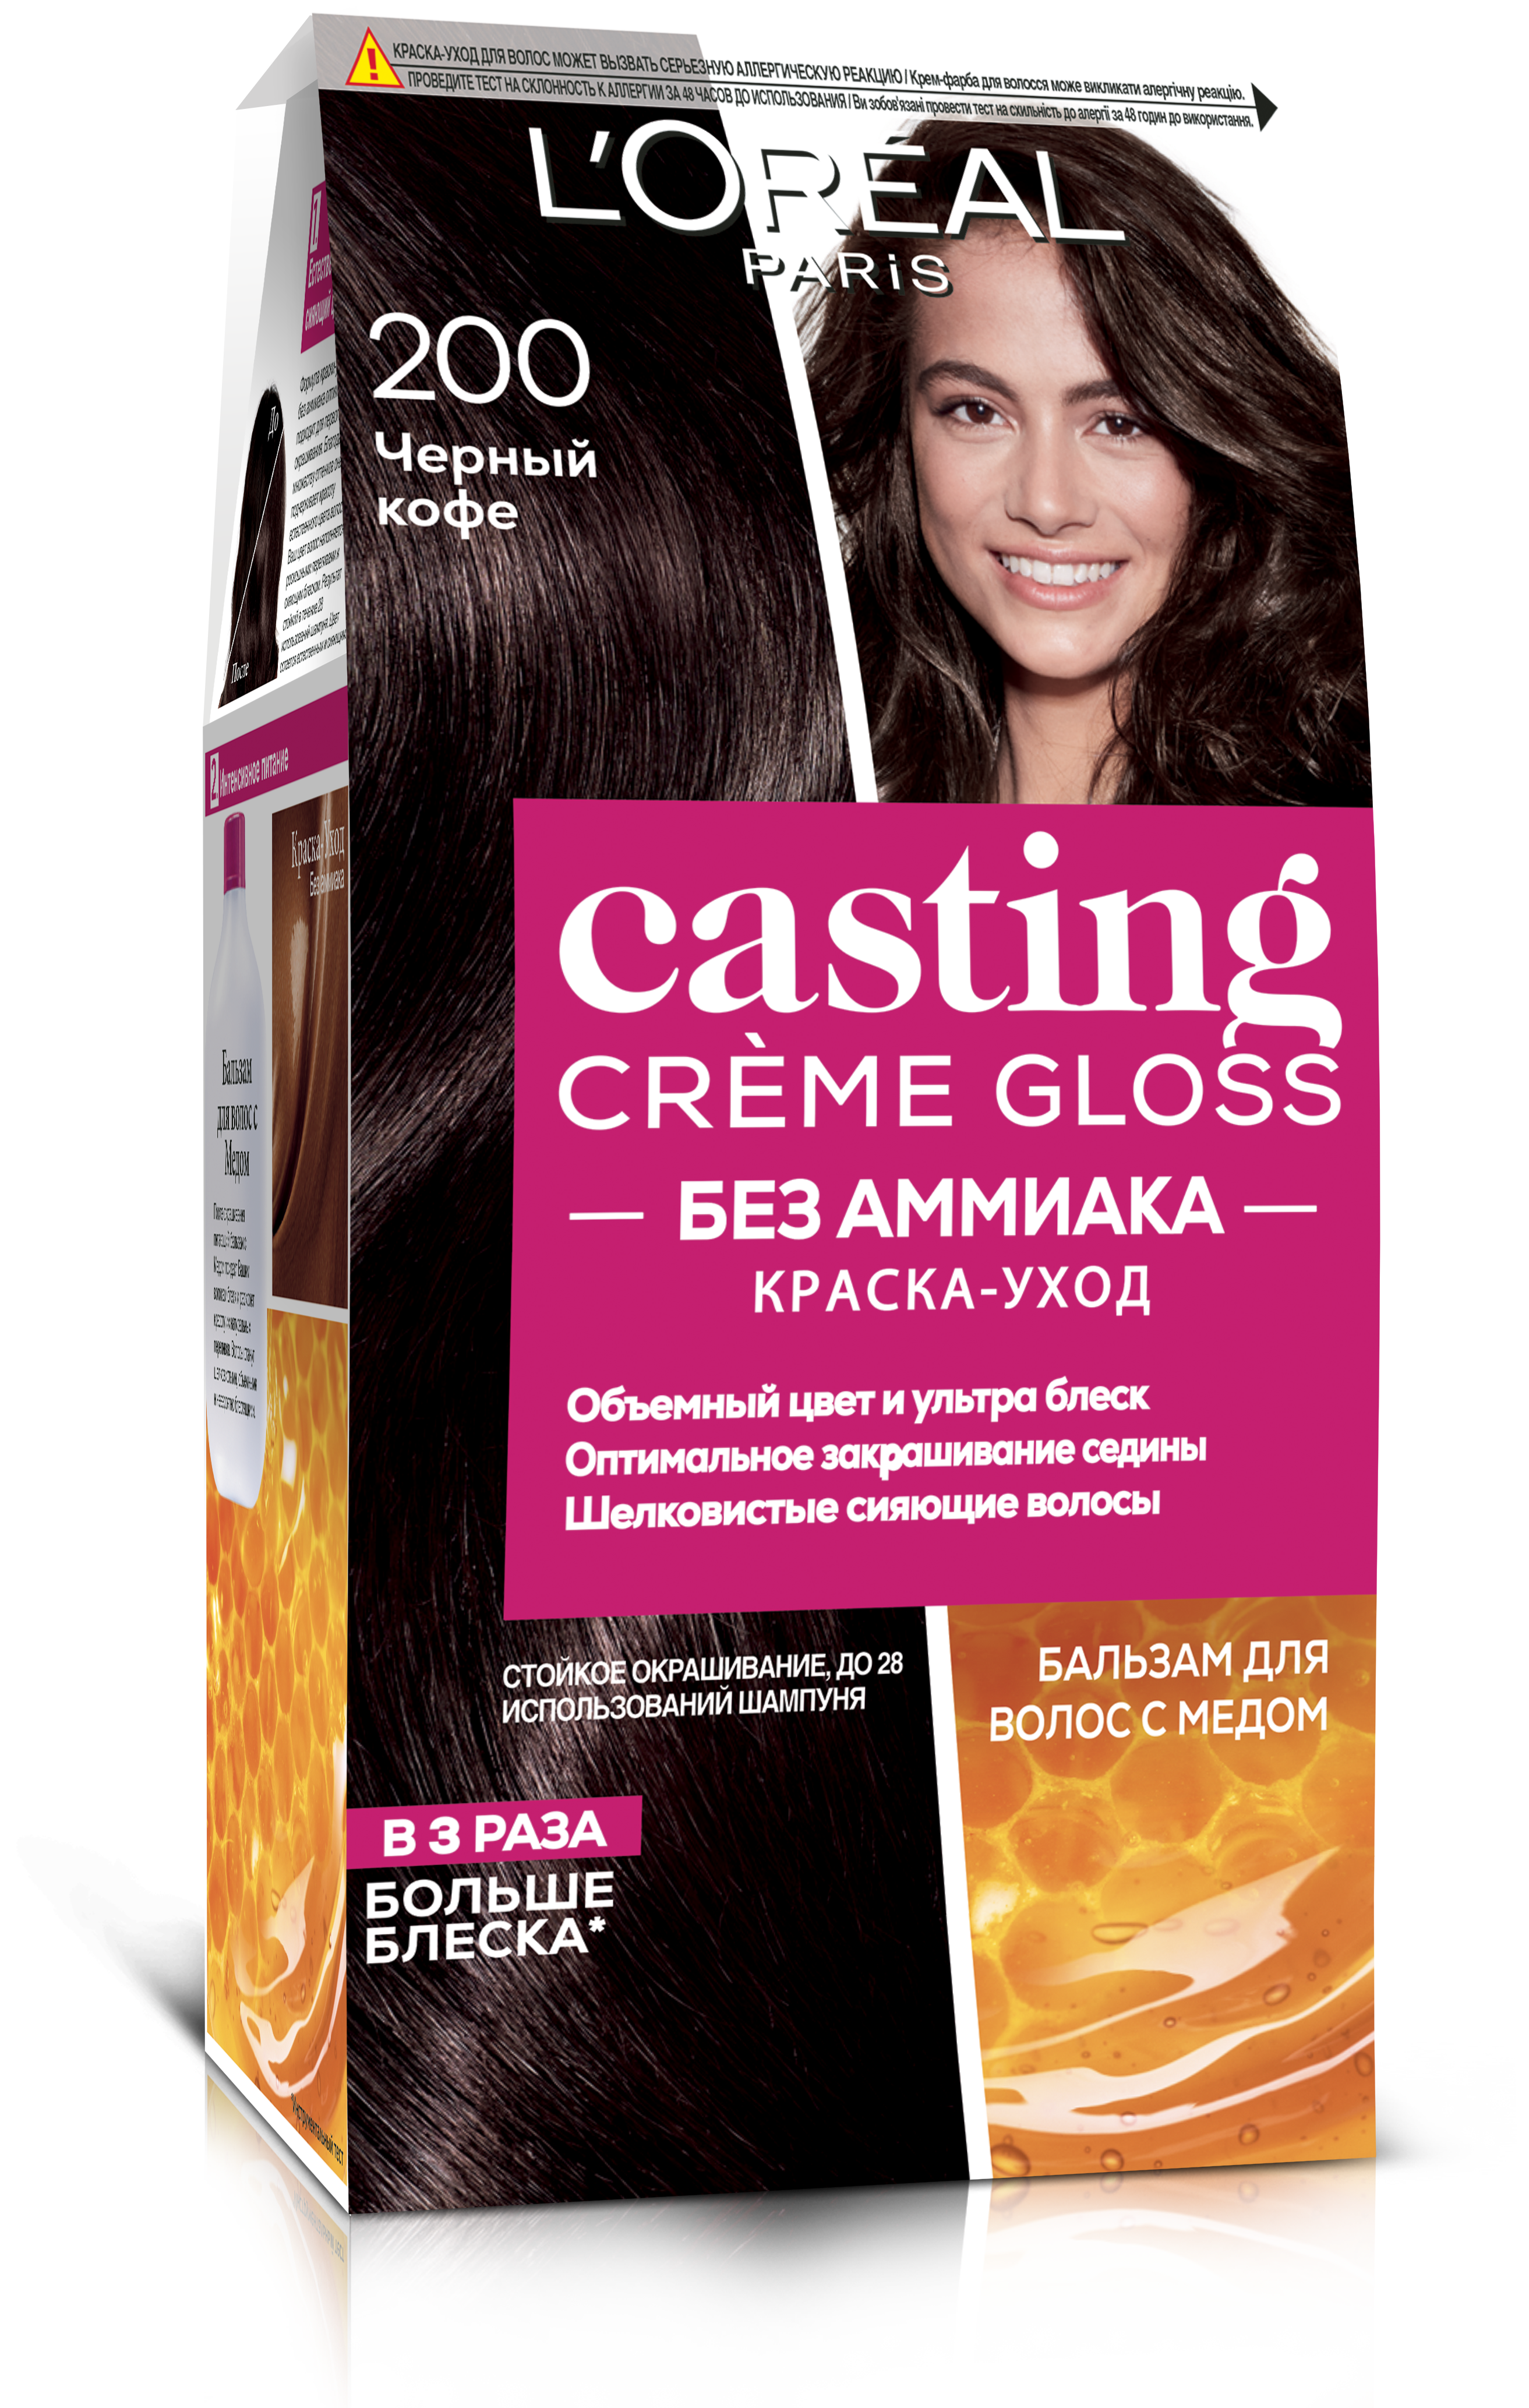 Краска-уход для волос без аммиака L'Oreal Paris Casting Creme Gloss, тон 200 (Черный кофе), 120 мл (A5773976) - фото 1